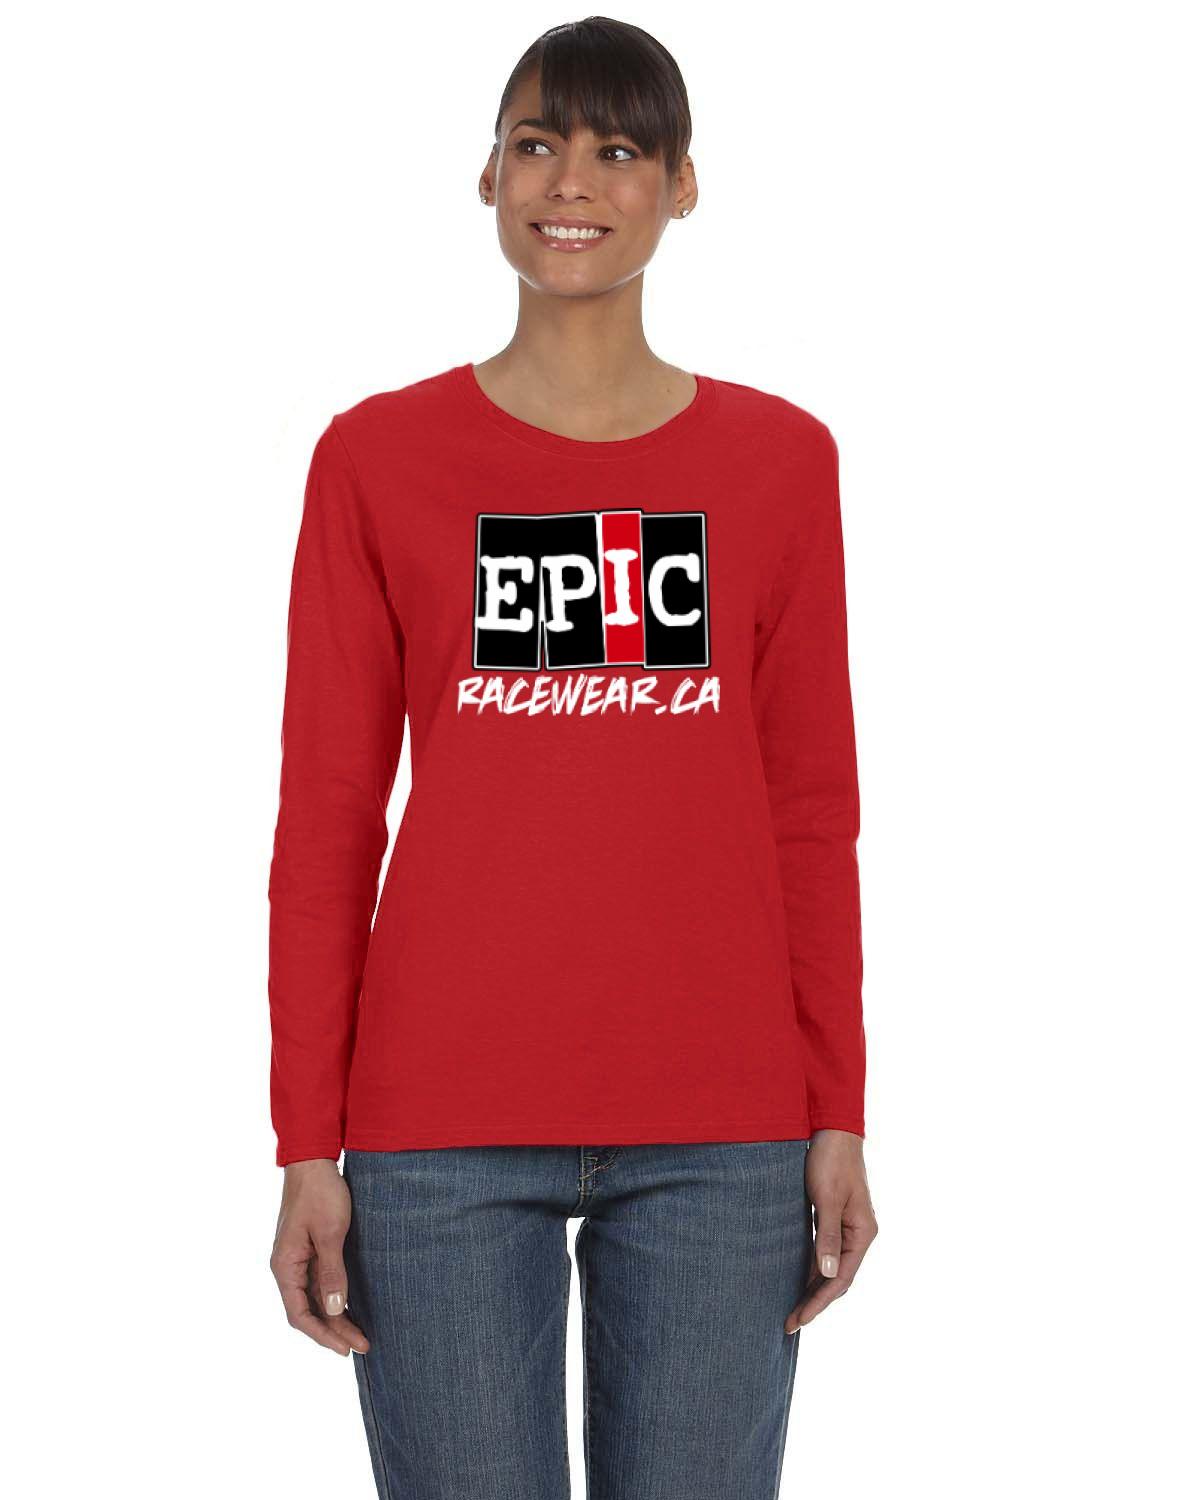 EPIC Racewear Ladies Long Sleeve Shirt